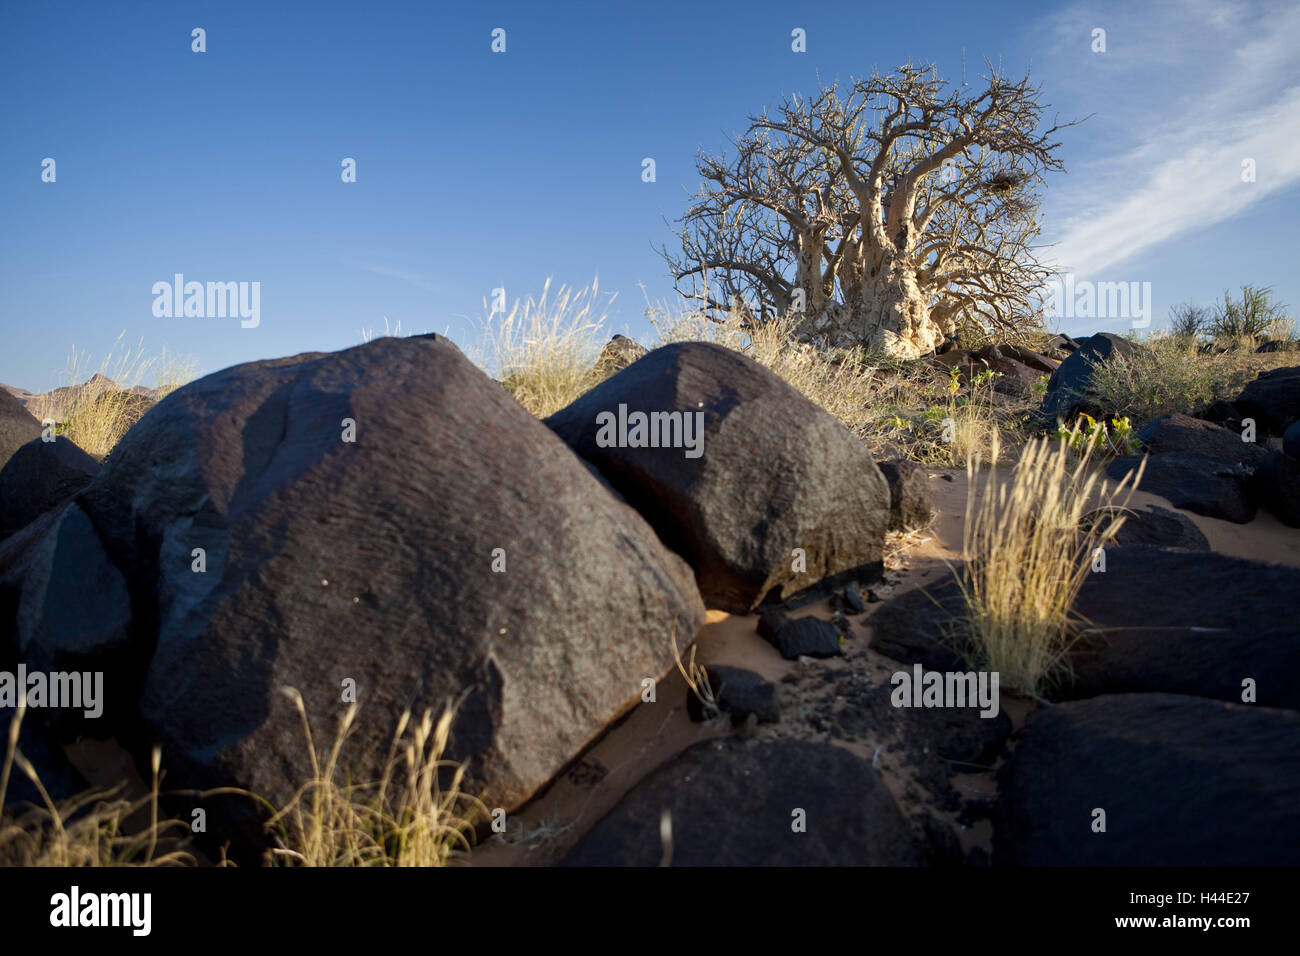 Africa, Namibia, region Kunene, Erongo, Damaraland, Huab, dry river, ephemeral, stones, grass, balm tree, Commiphora, Stock Photo